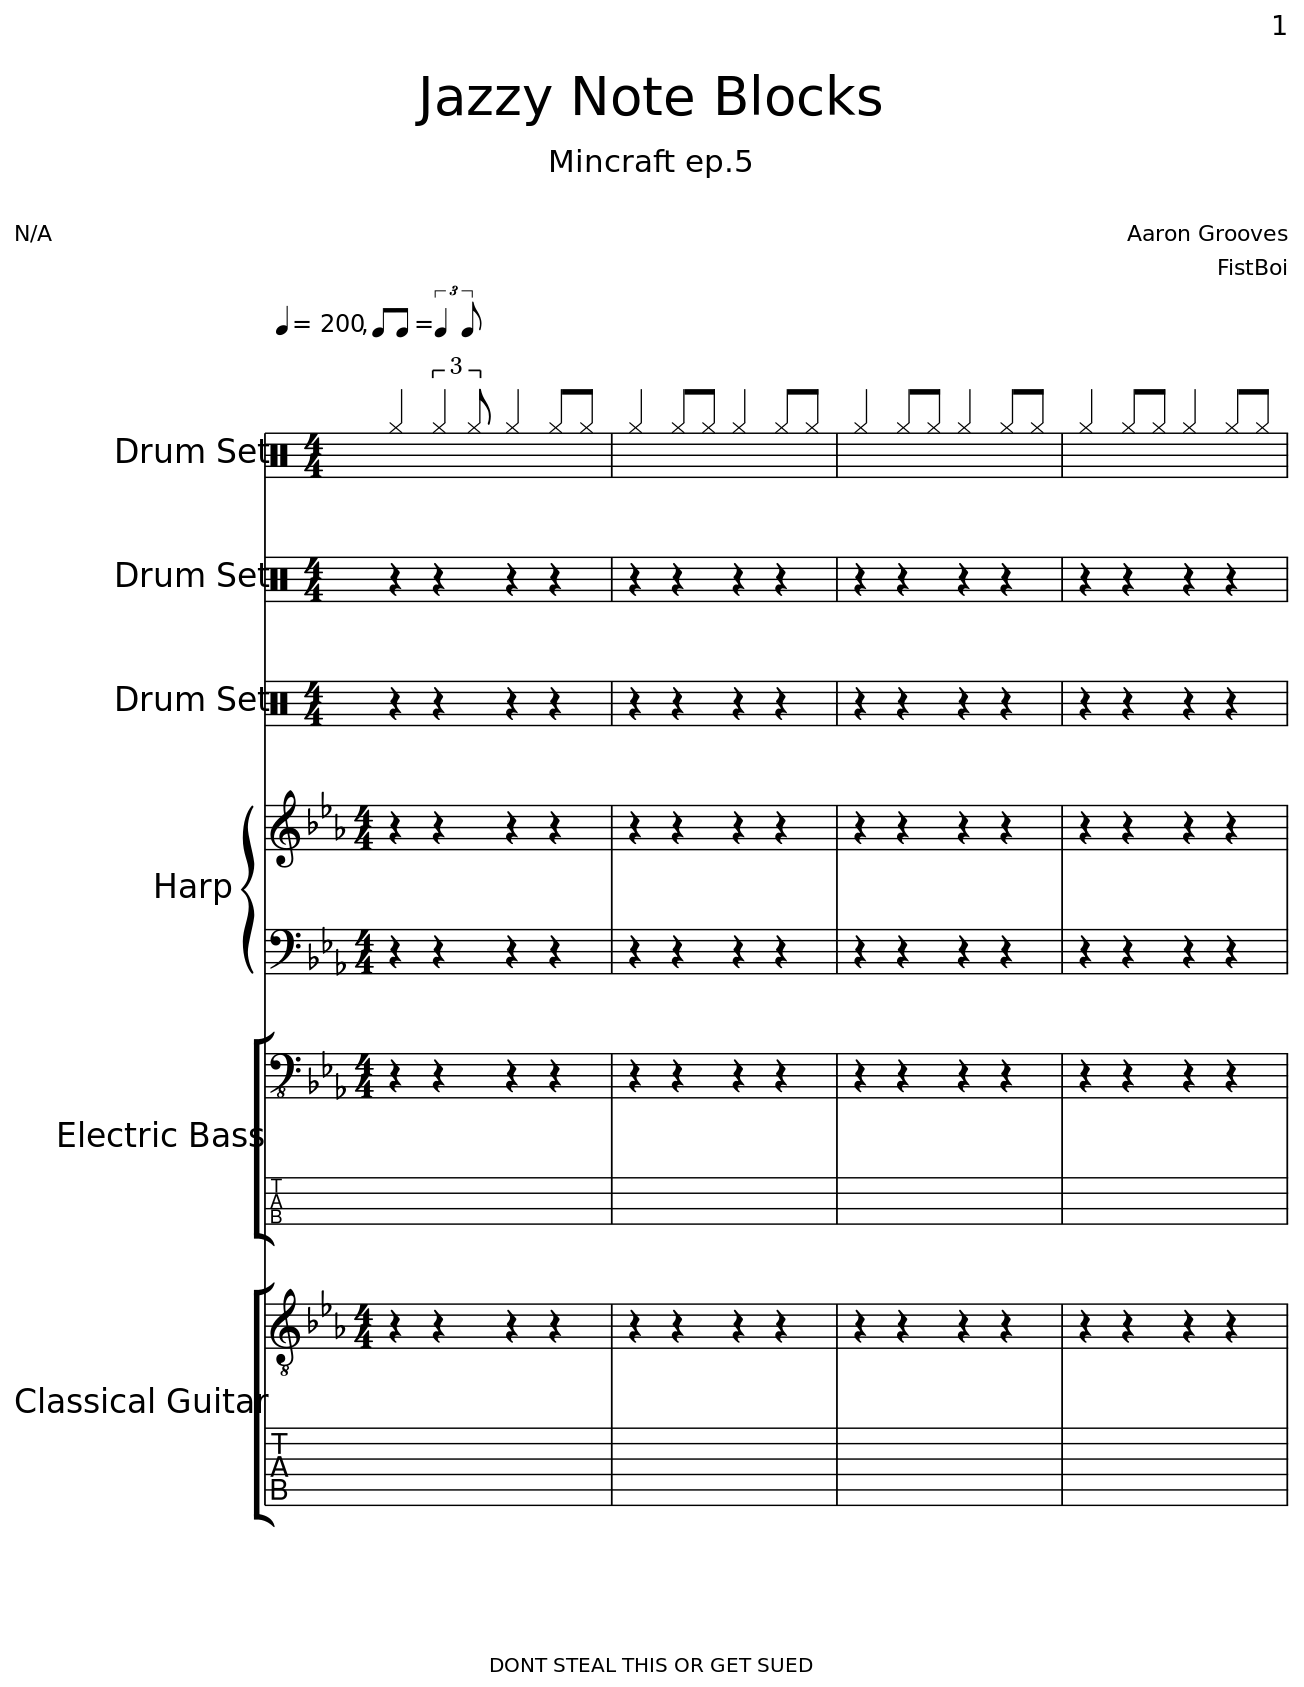 Jazzy Note Blocks Sheet music for Flute, Glockenspiel, Guitar, Bass guitar  & more instruments (Mixed Ensemble)